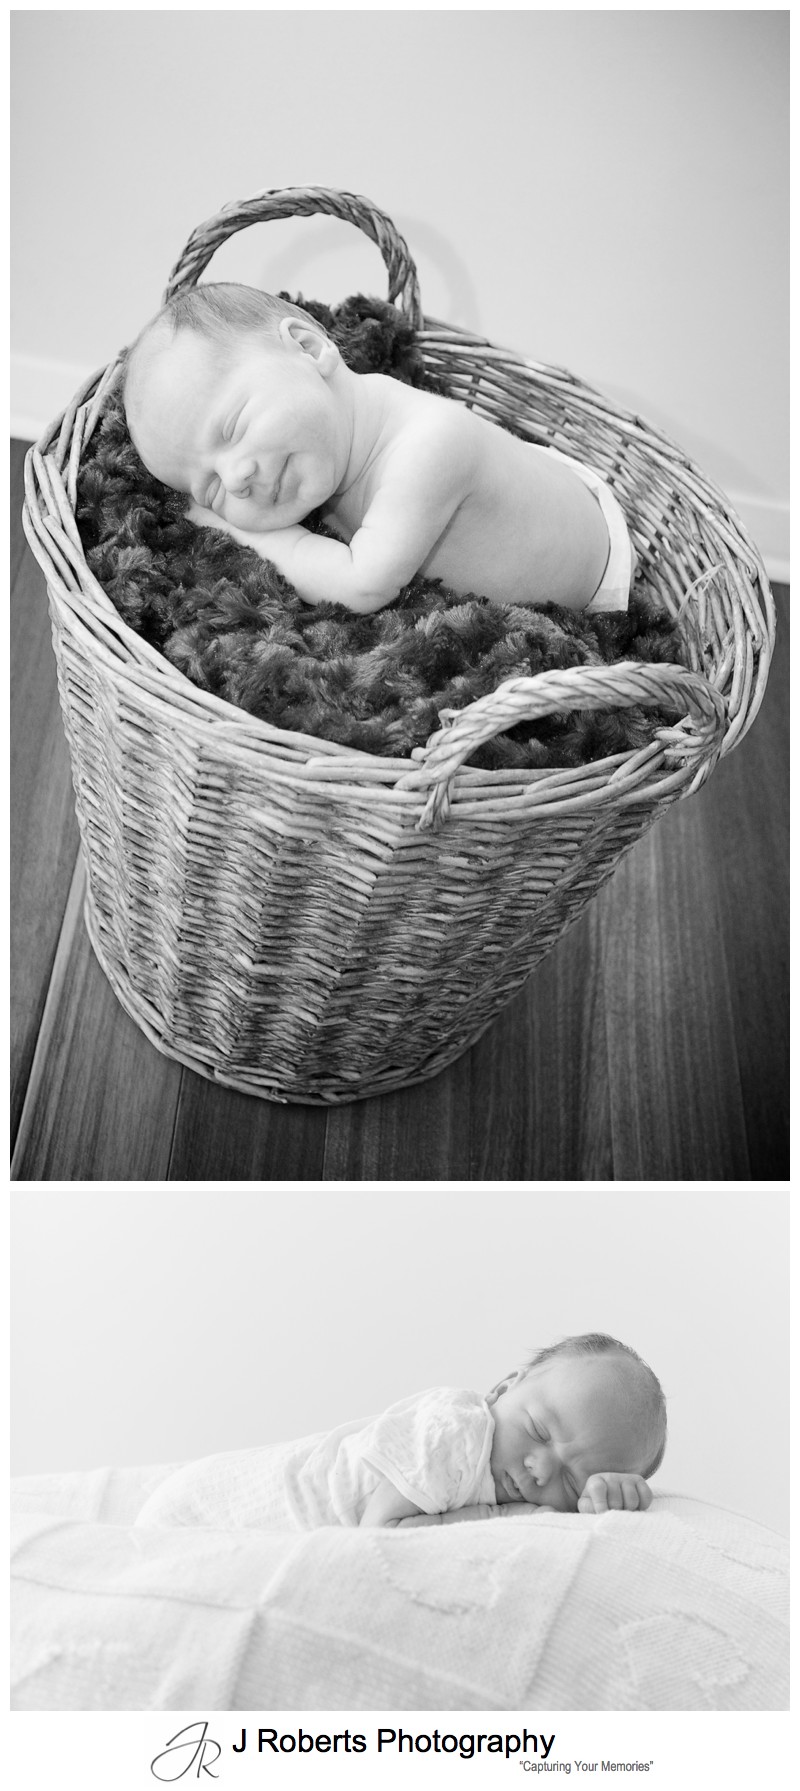 Baby portrait photography in a basket - newborn baby portrait photography sydney